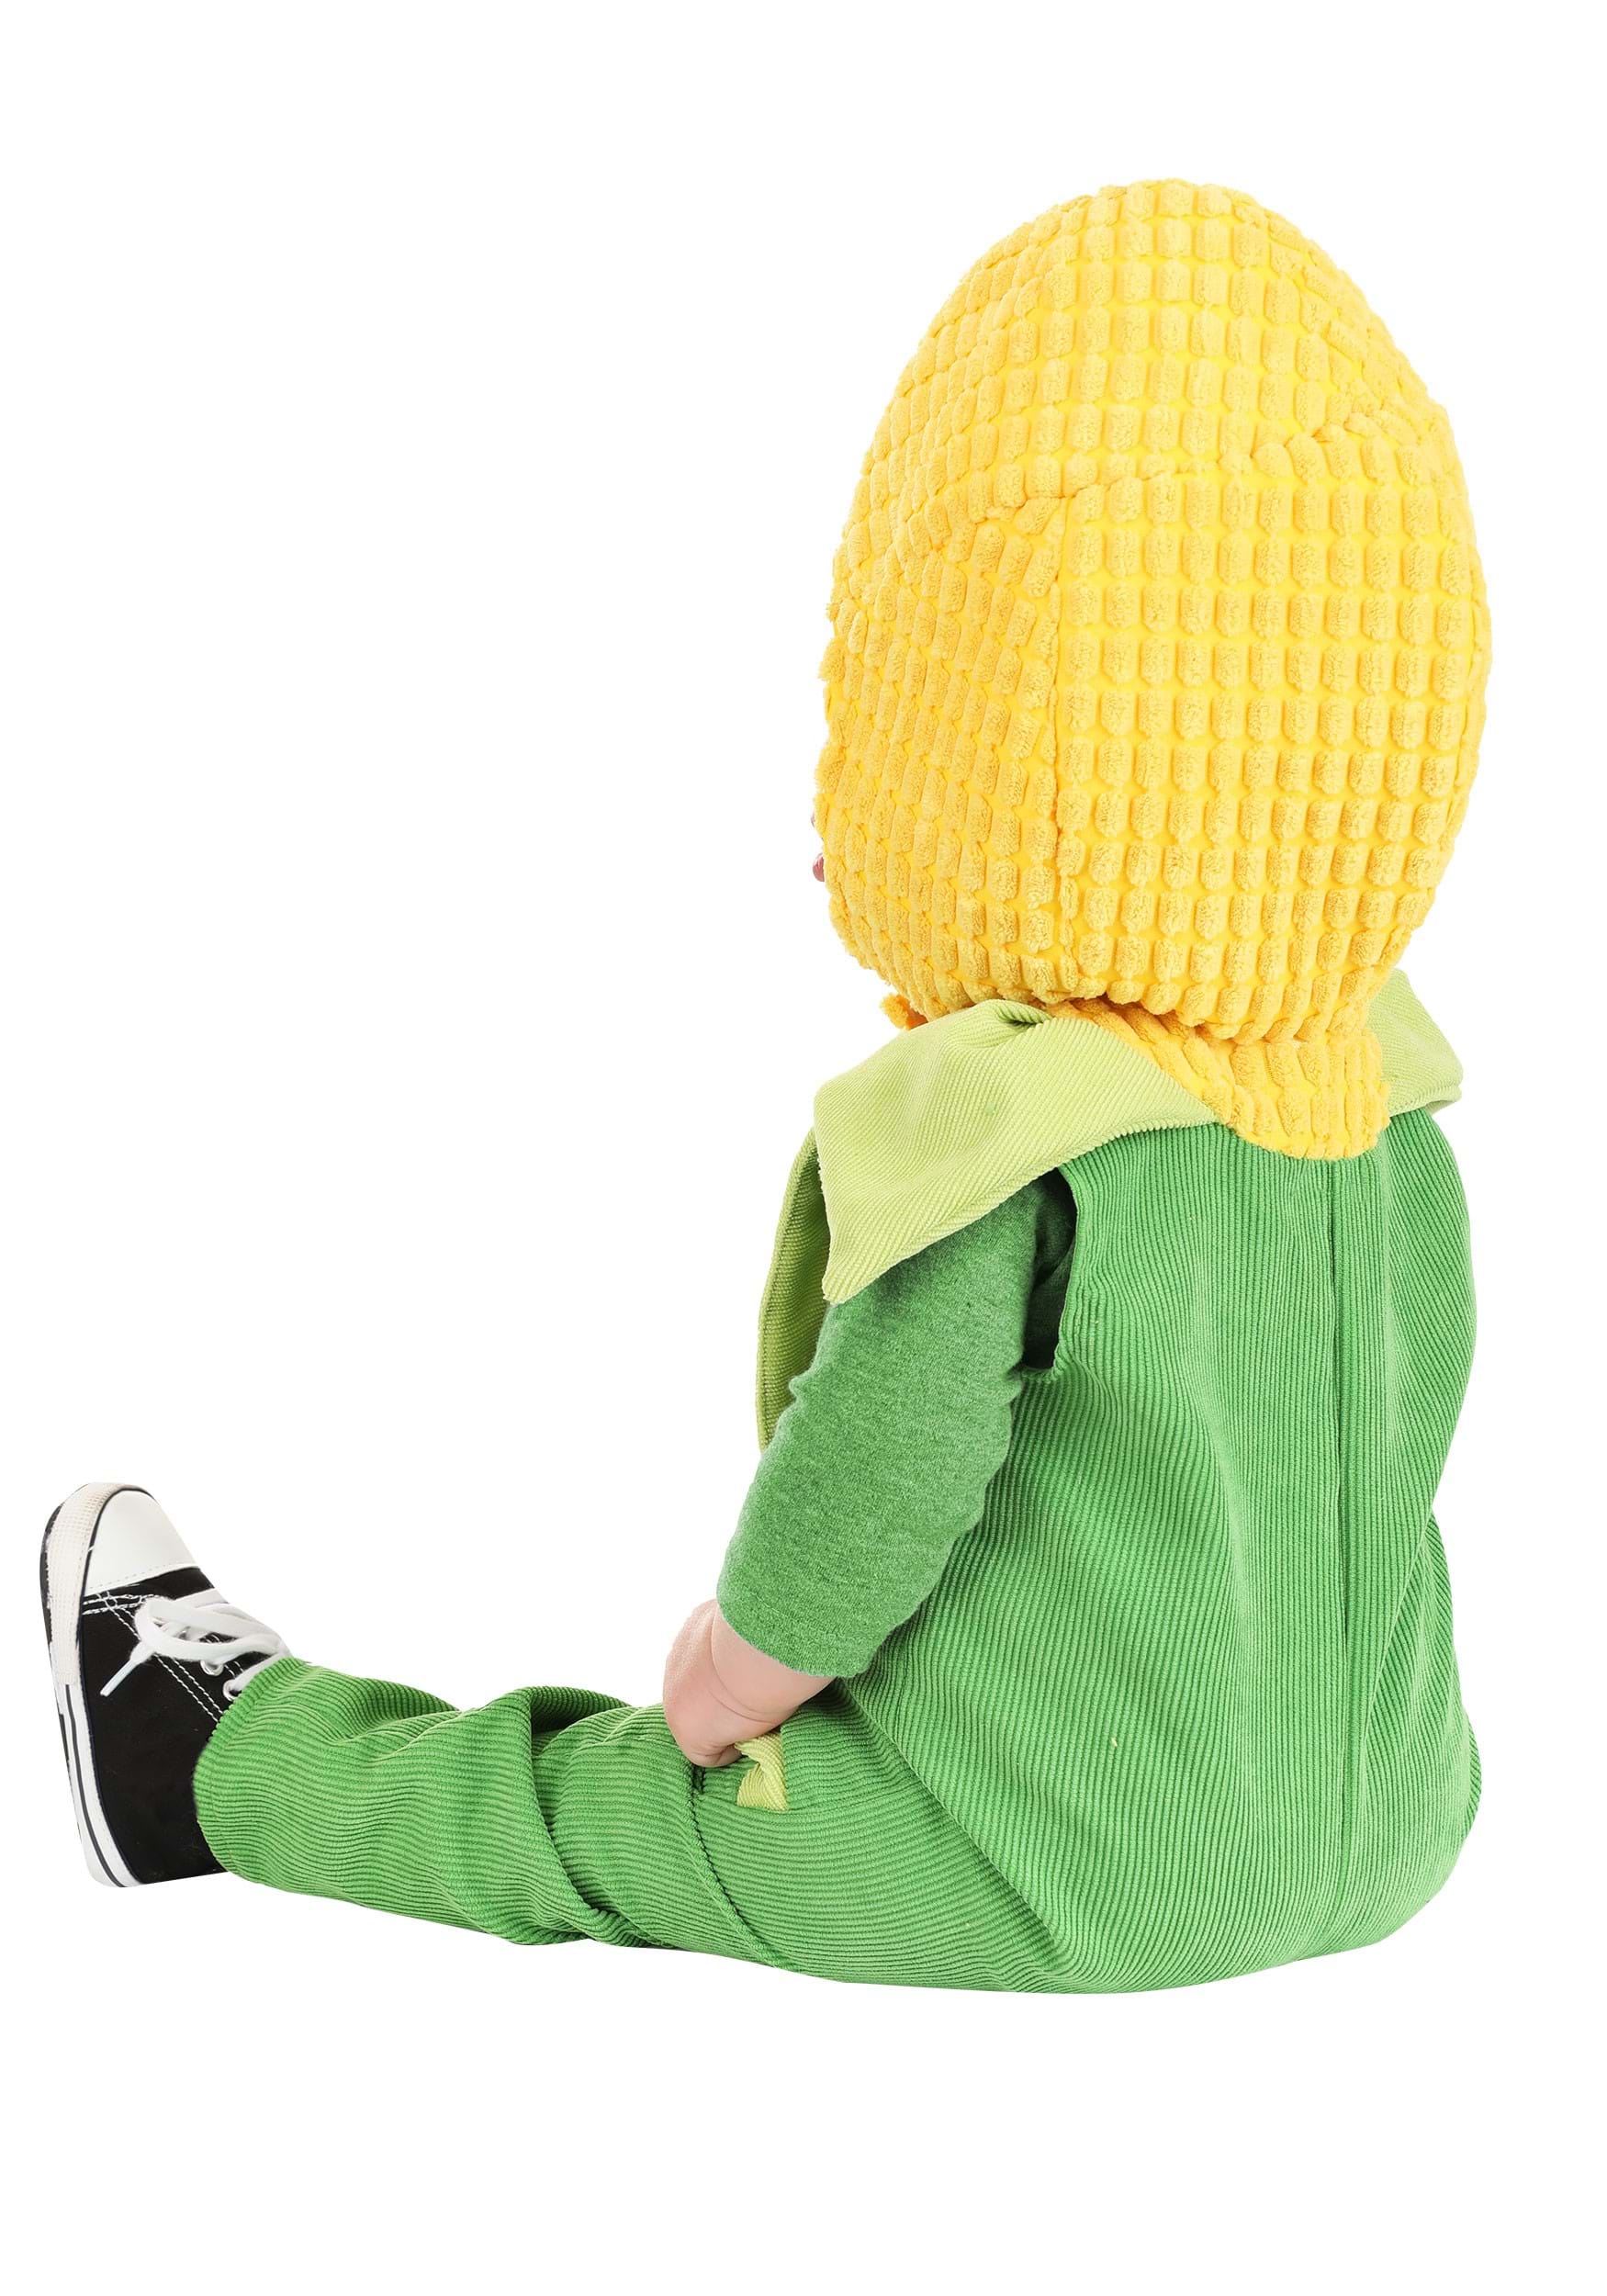 Corn Cob Jumper Costume For Infant's